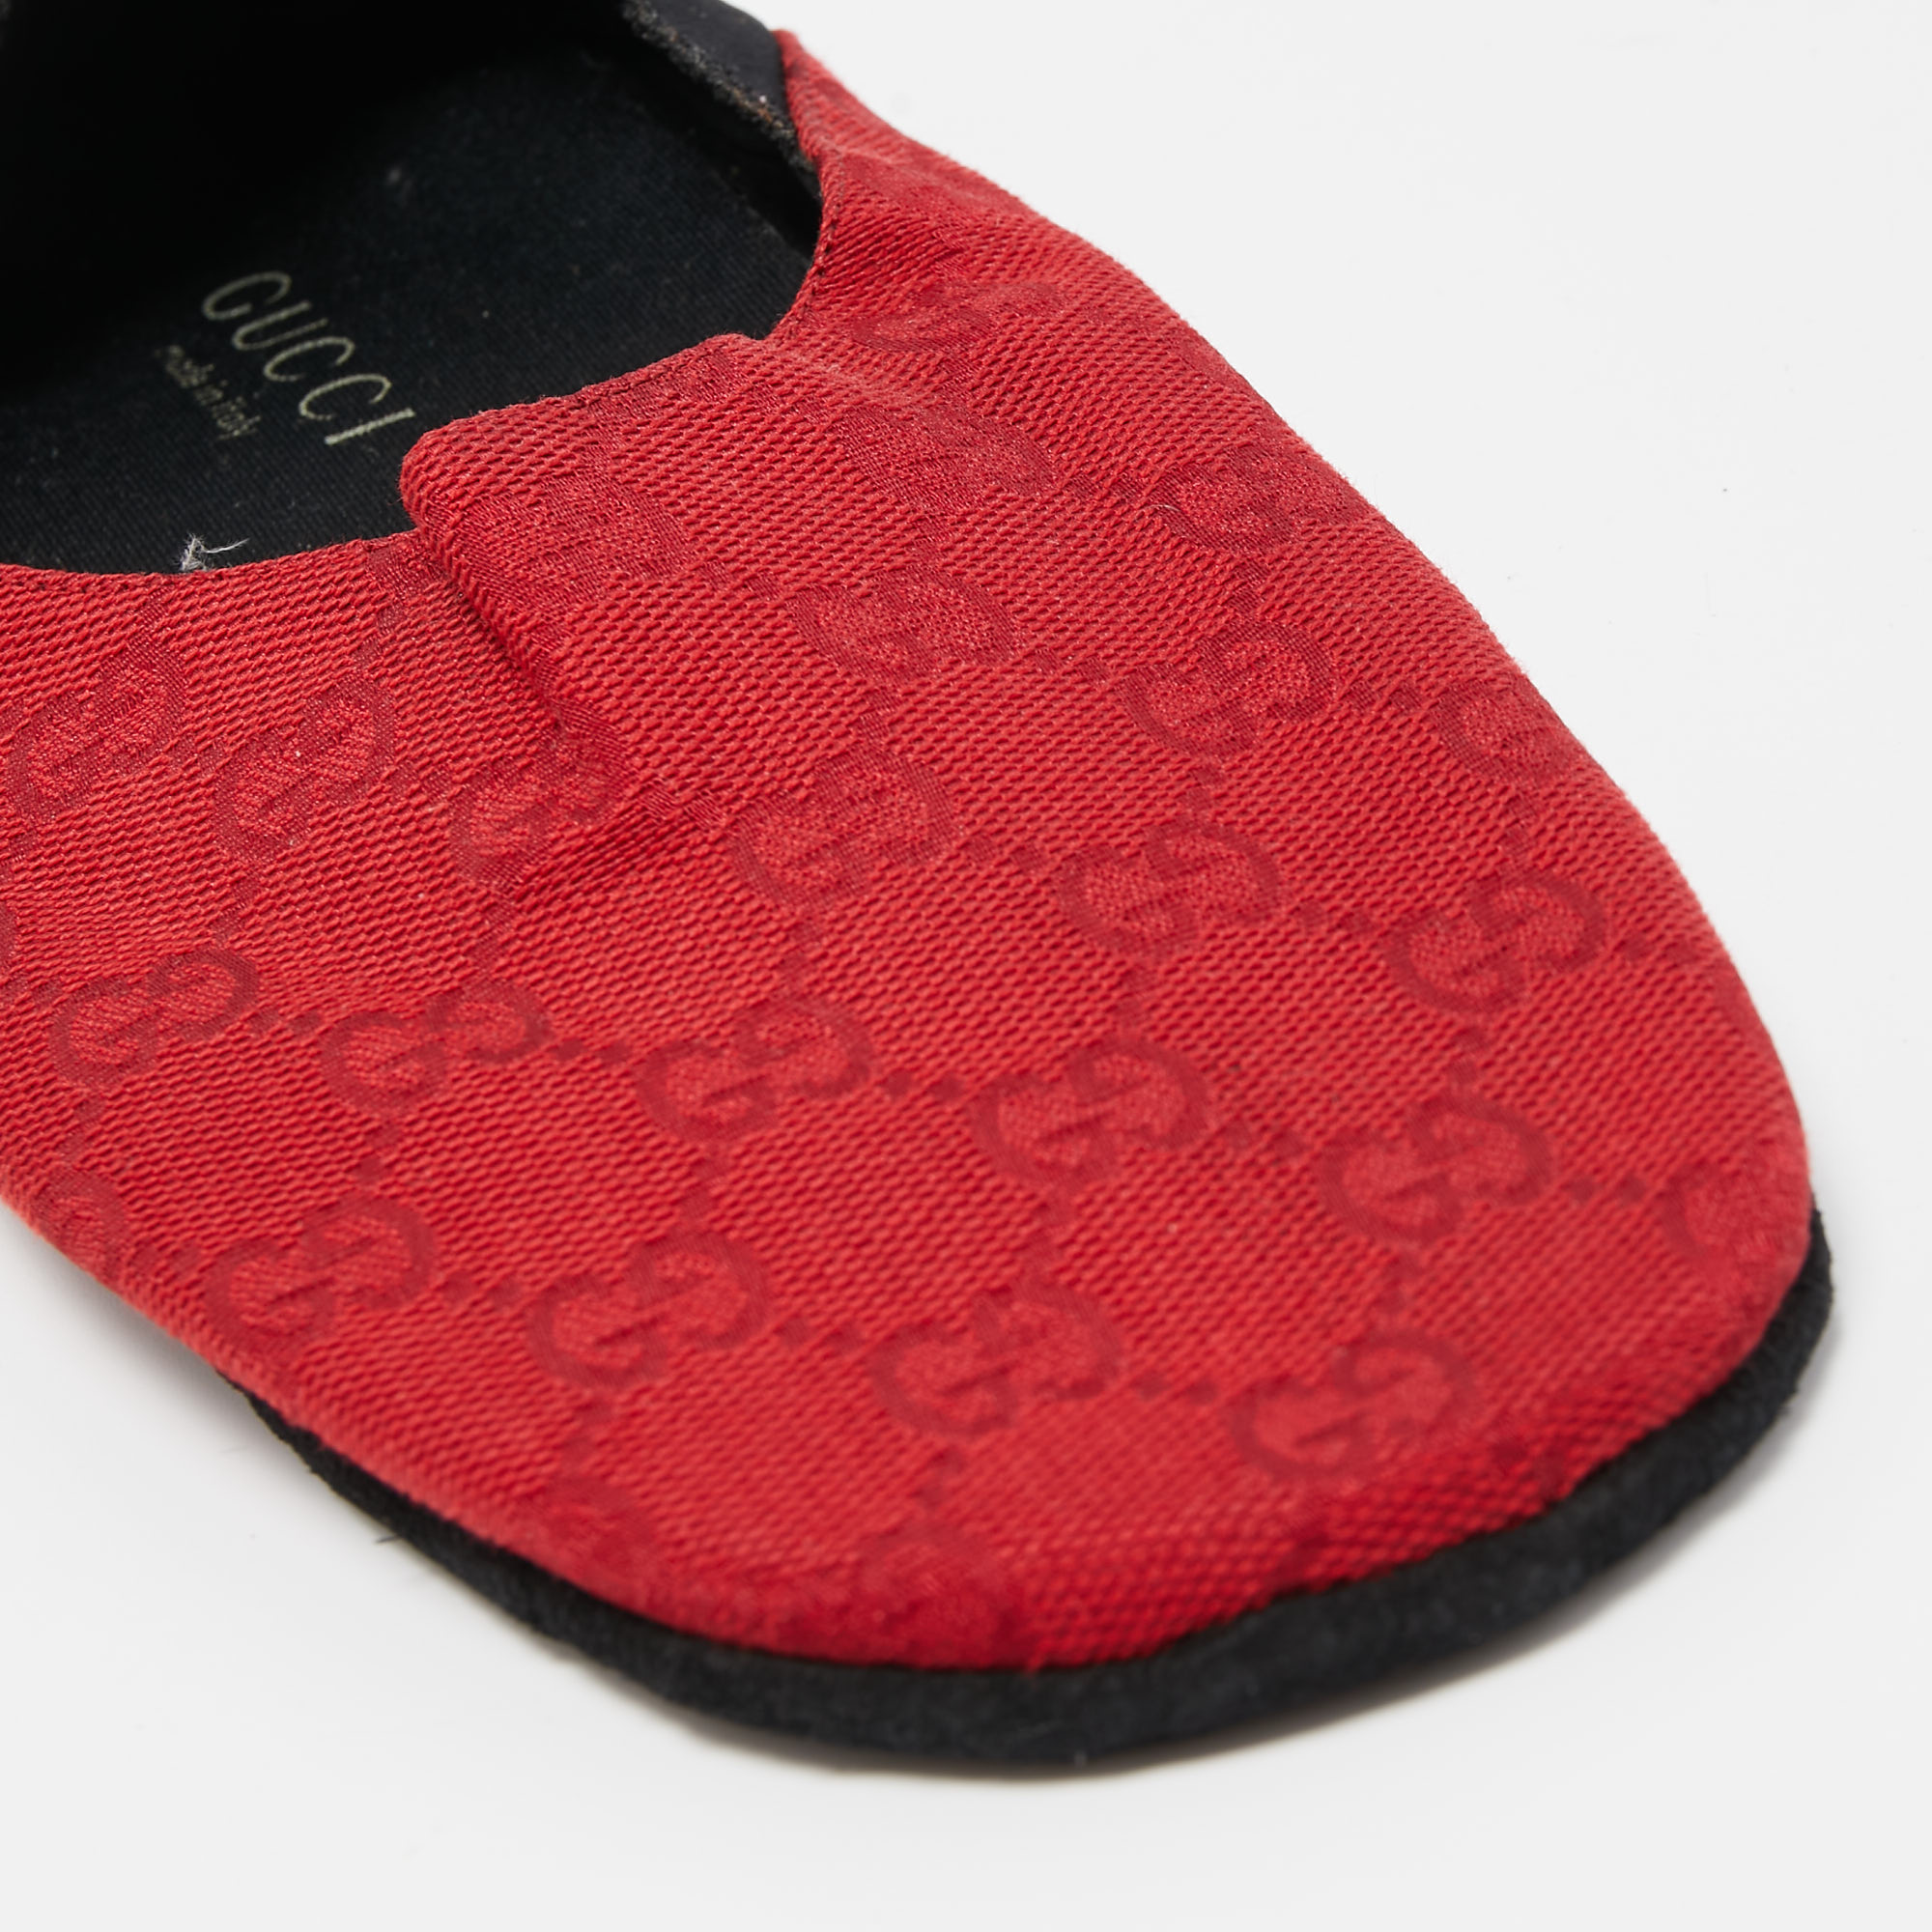 Gucci Red/Black Guccissima Canvas And Fabric Flats Size 36